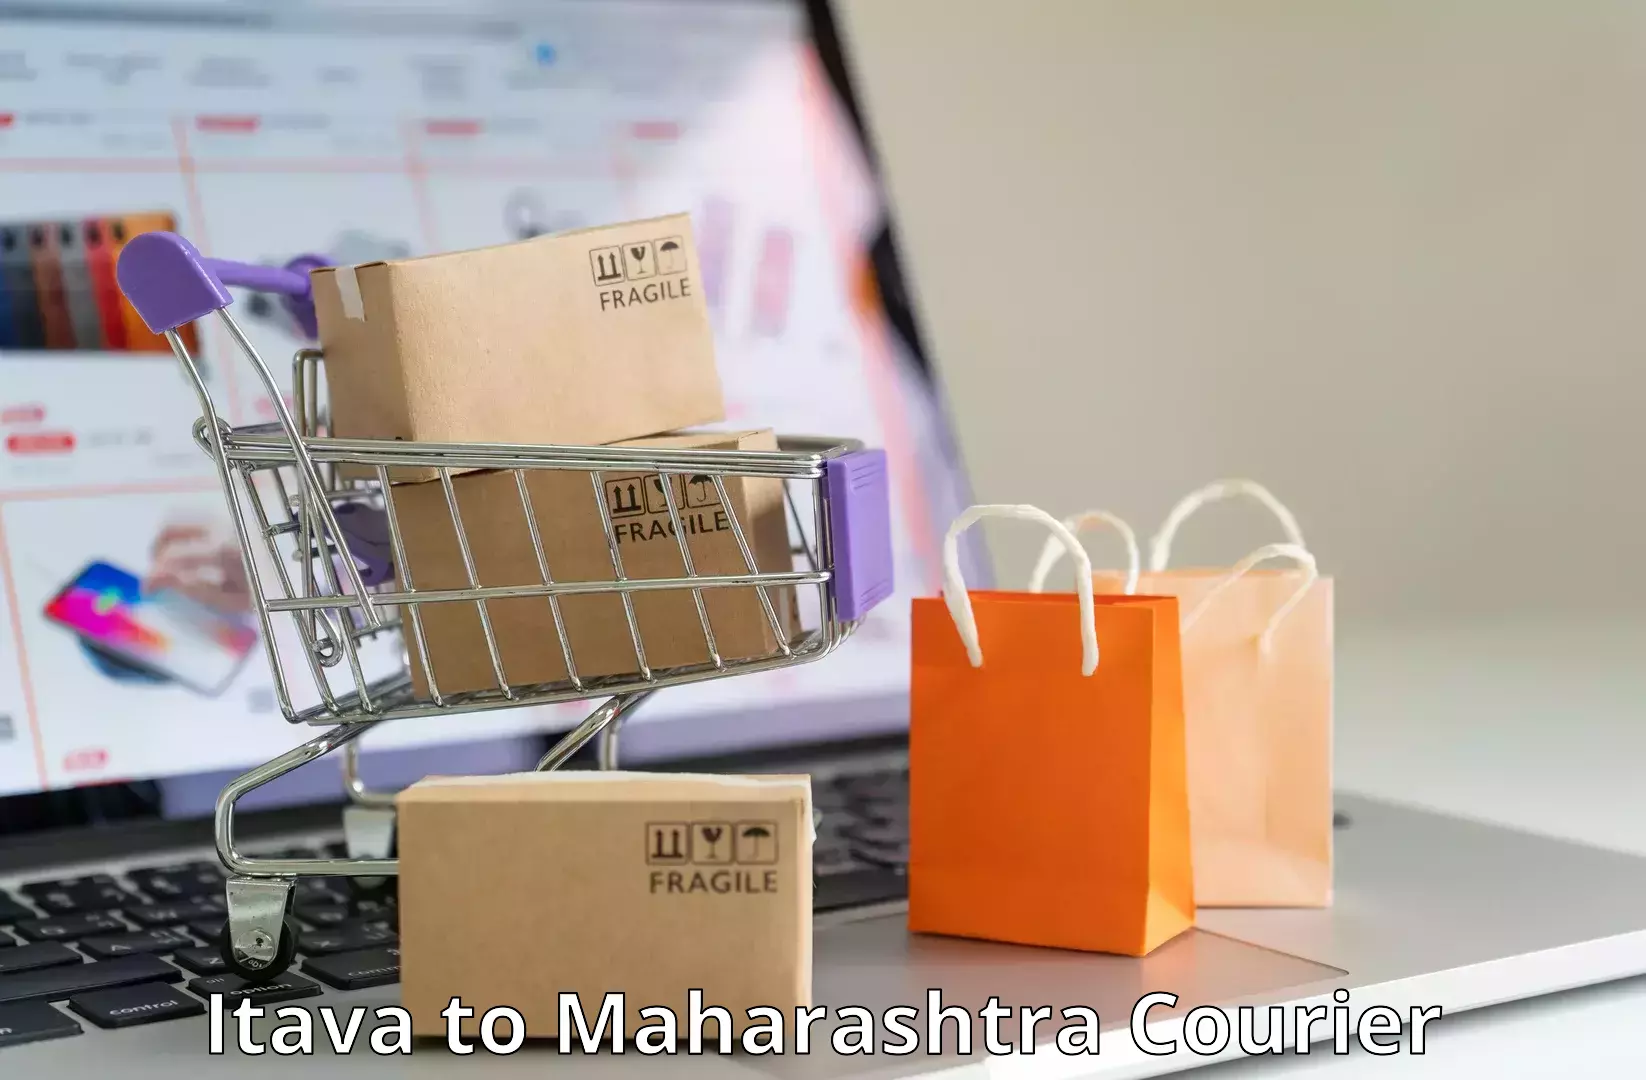 Full-service courier options Itava to Navi Mumbai